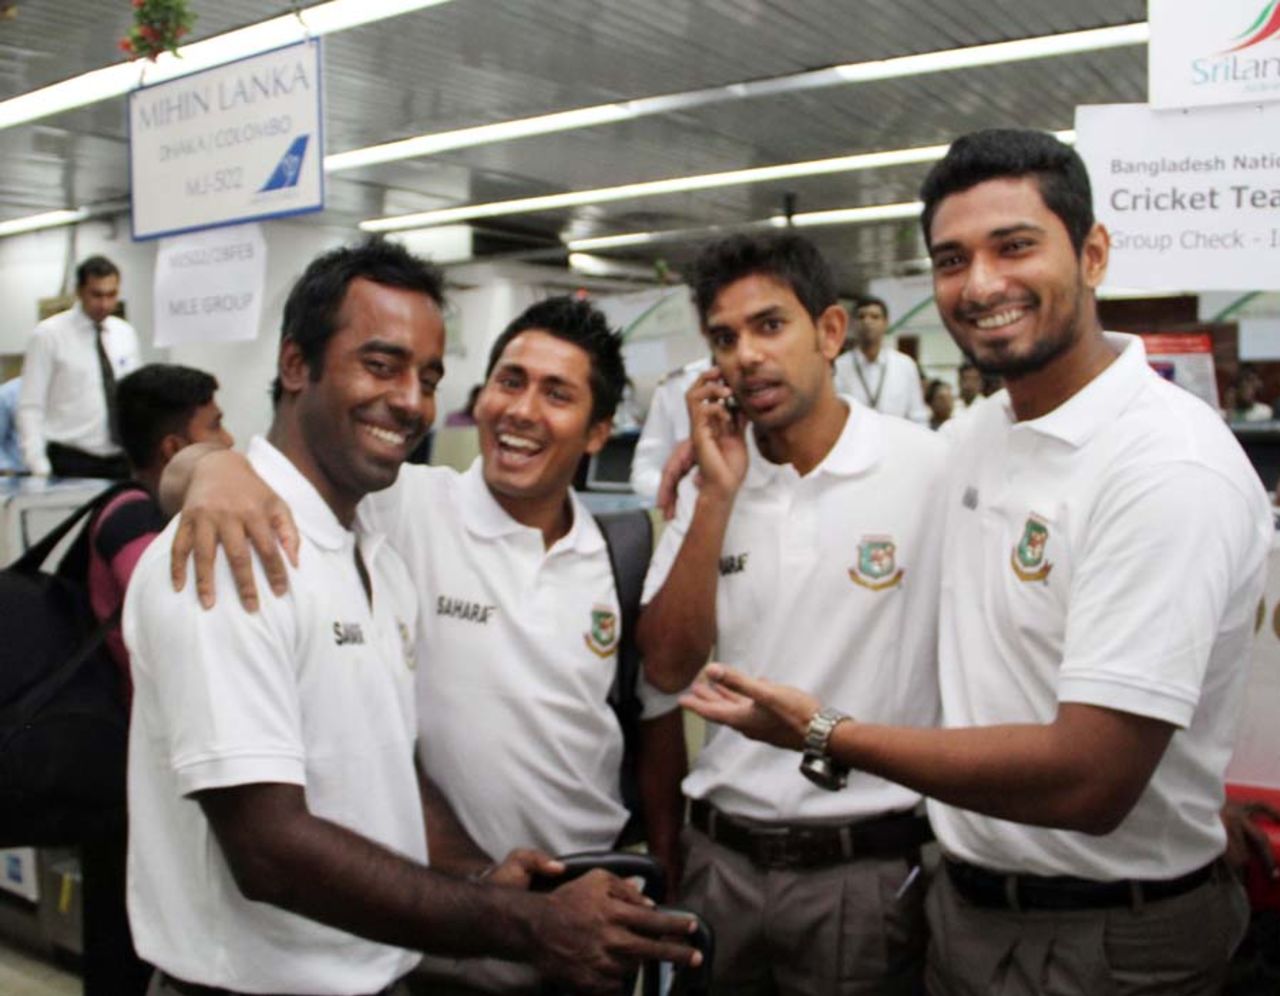 Elias Sunny, Mohammad Ashraful, Marshall Ayub and Mahmudullah before departing for Sri Lanka, Dhaka, February 28, 2013